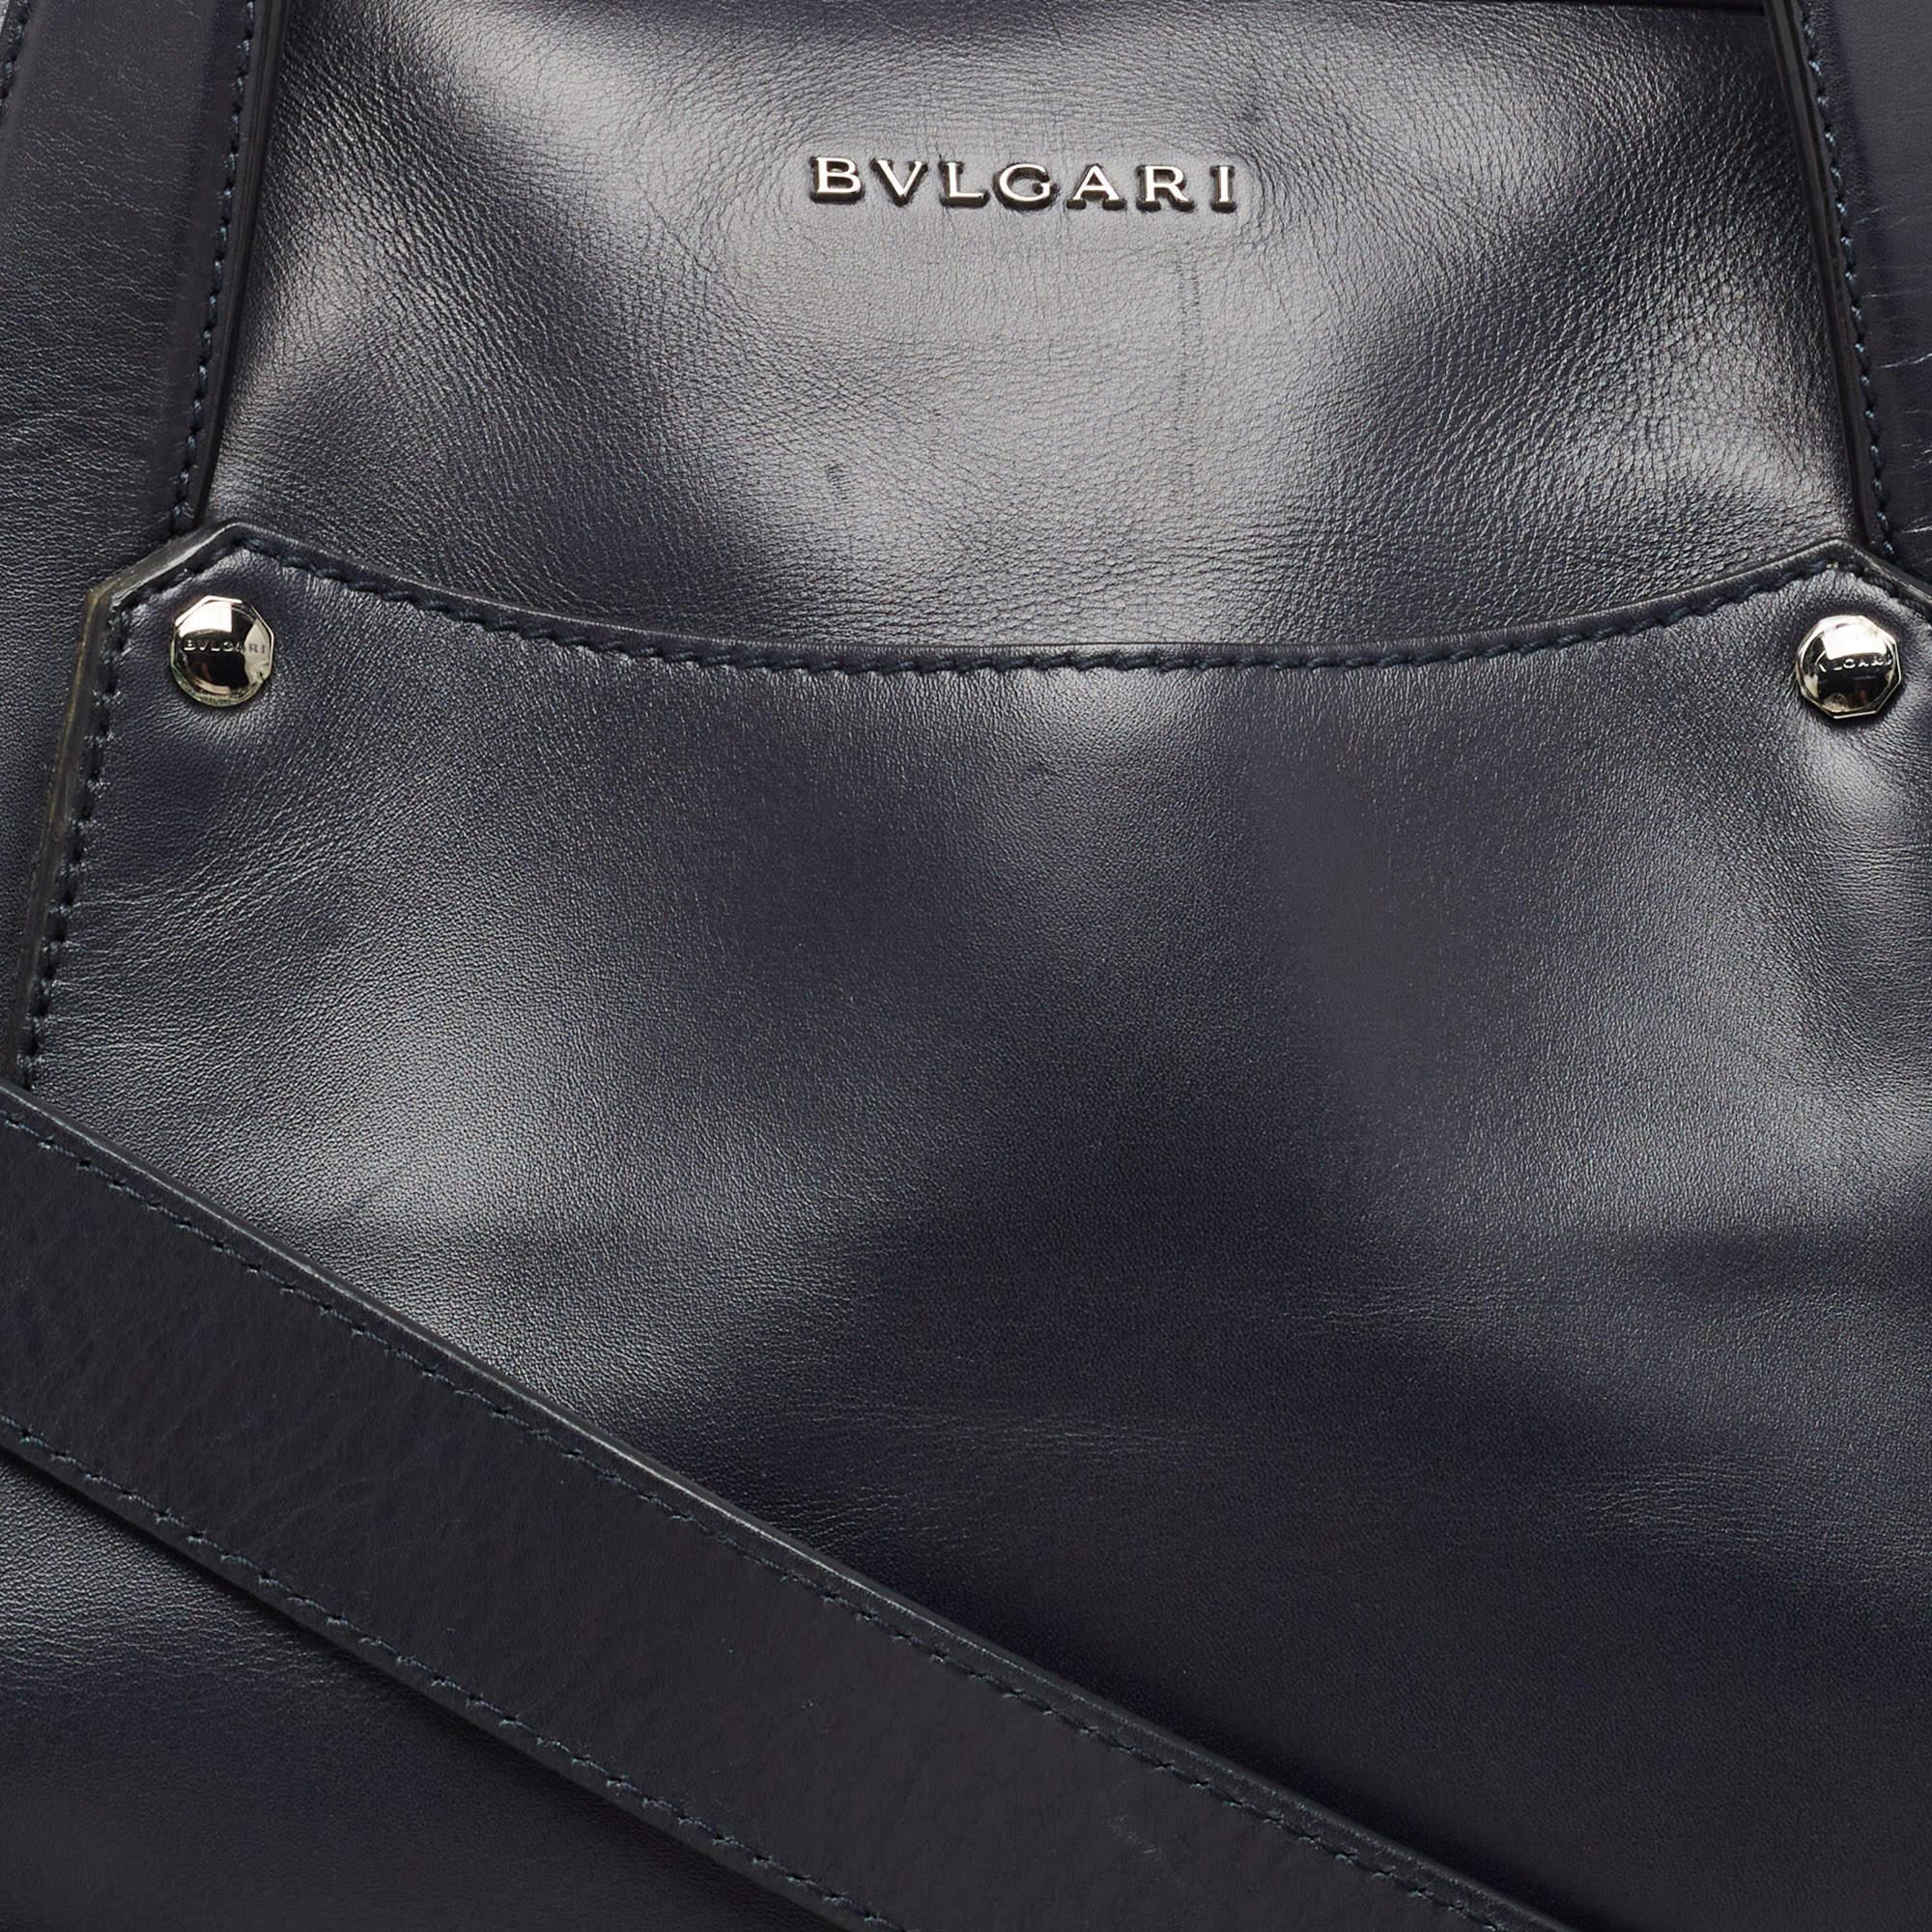 Bvlgari Black Leather Zip Satchel In Good Condition For Sale In Dubai, Al Qouz 2